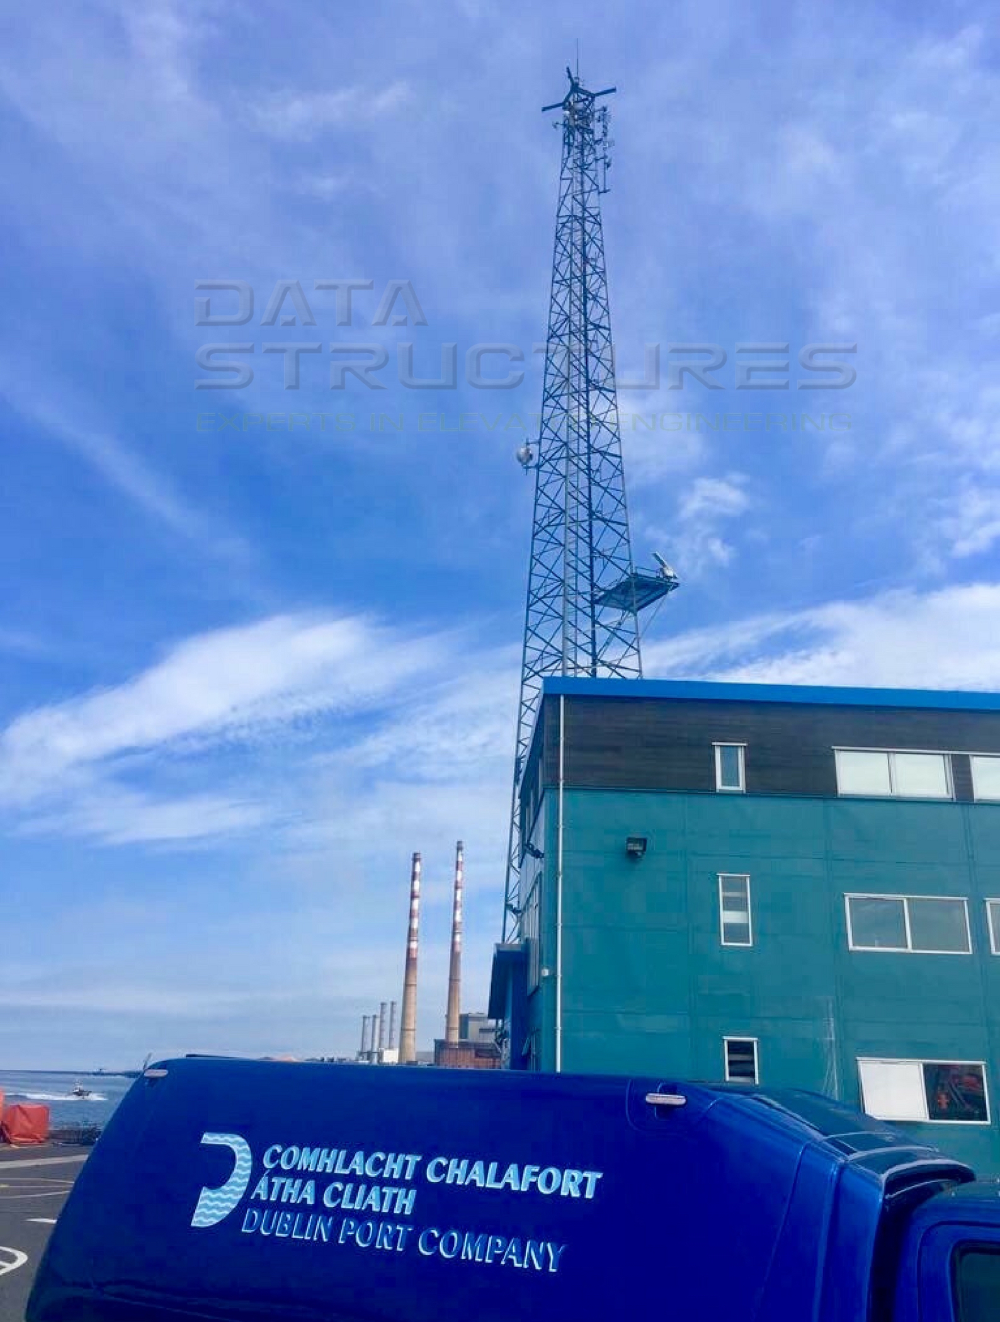 Maintenance work for Dublin Port Company by DSI